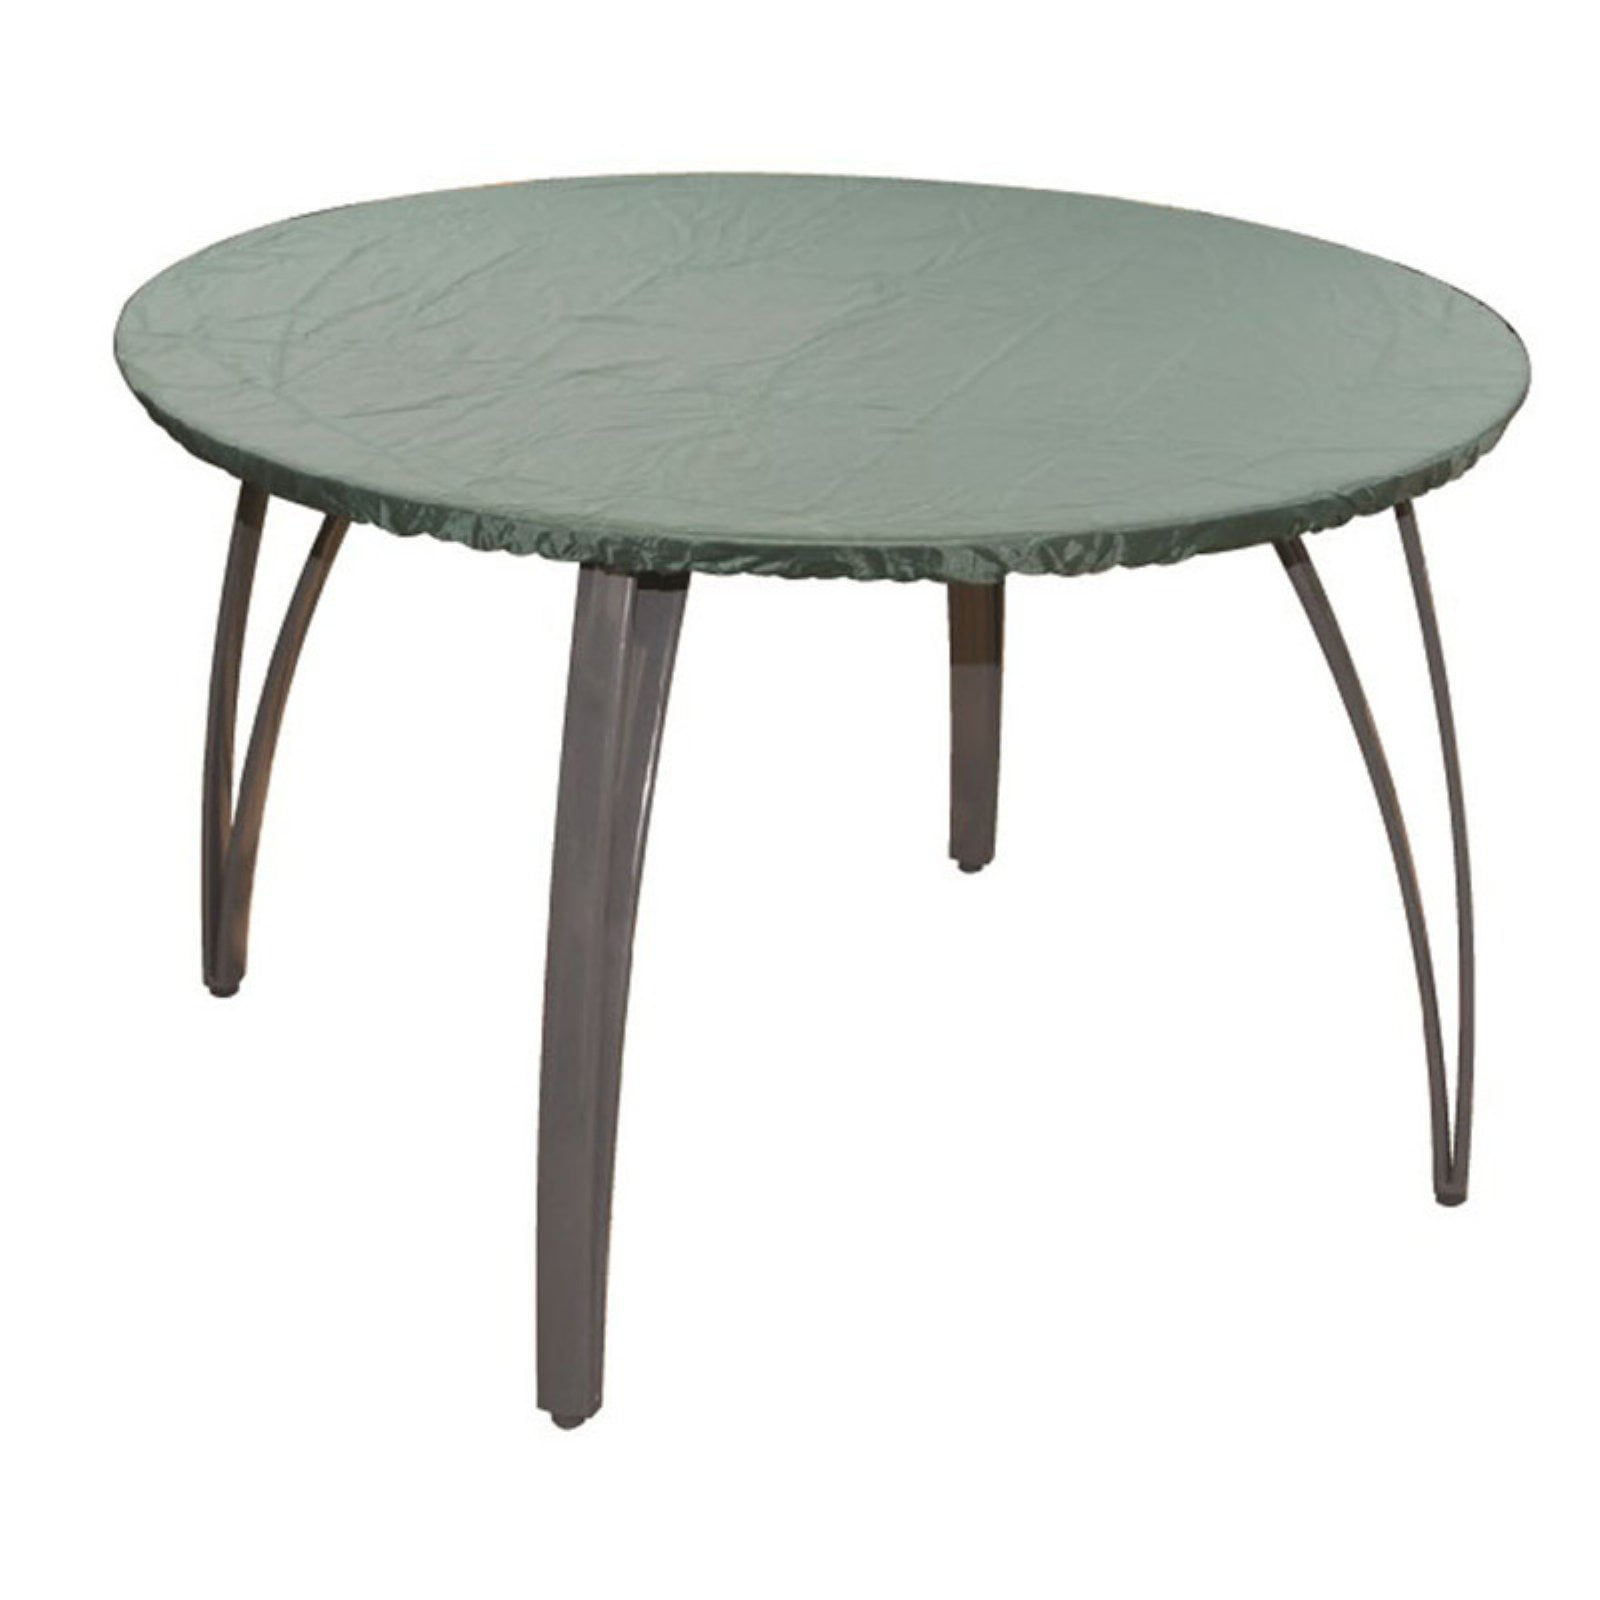 Medium Round Waterproof Outdoor Garden Patio Table Chairs Set Furniture Cover UK 